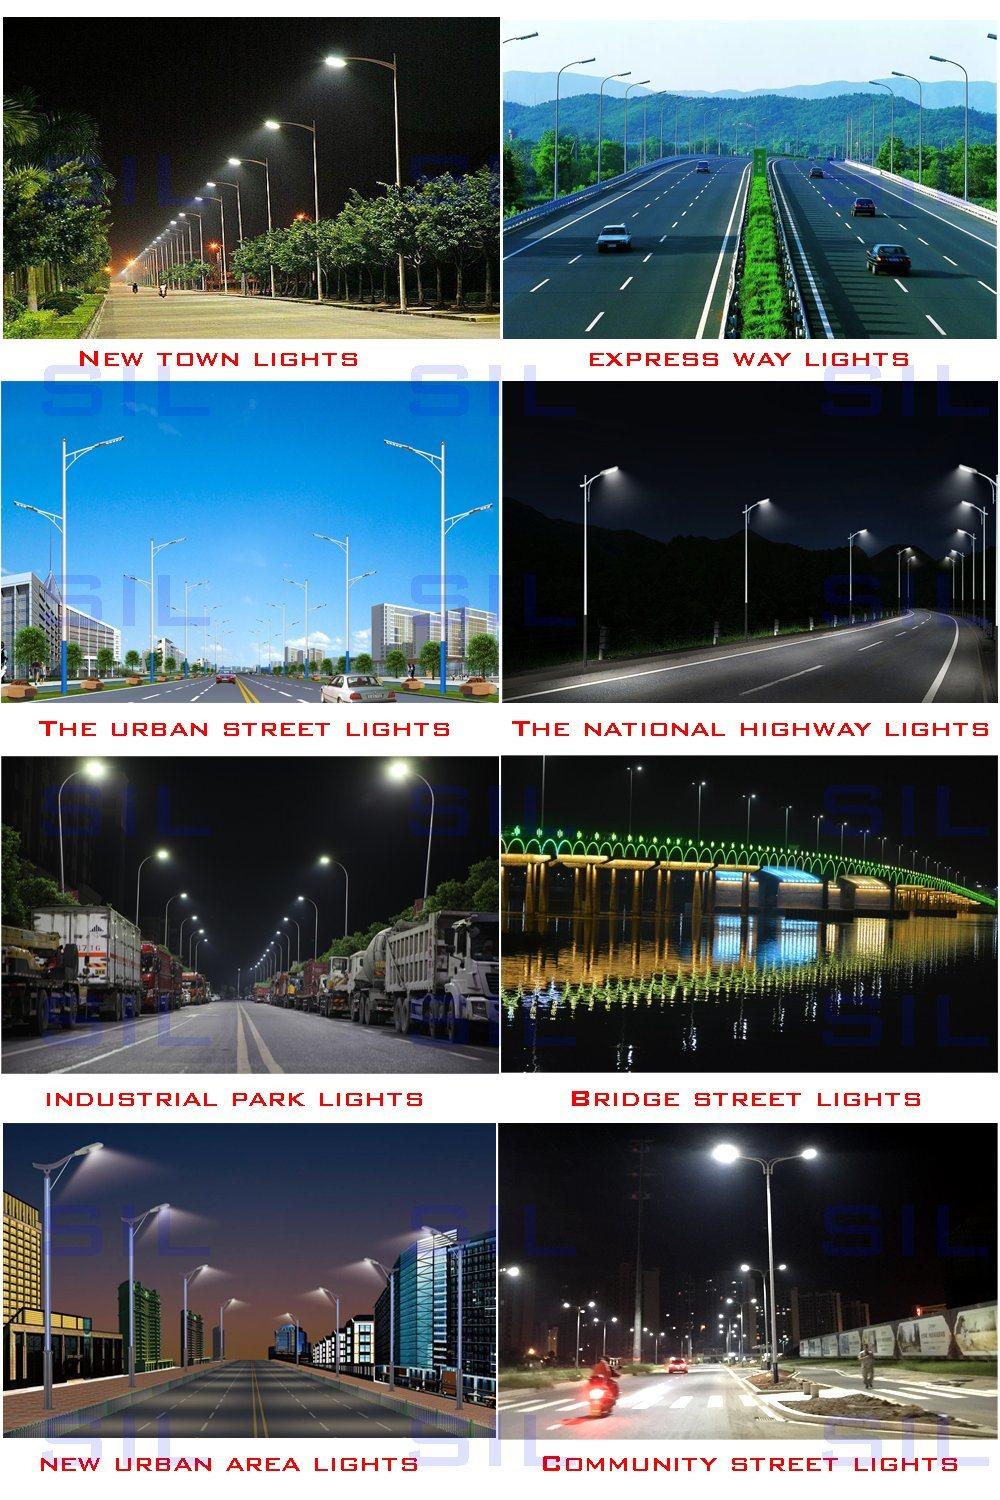 Solar Street Lamp High Lumen Induction Motion Sensor Waterproof Integrated Outdoor Luminaria Road LED Garden 100W Solar Street Lights